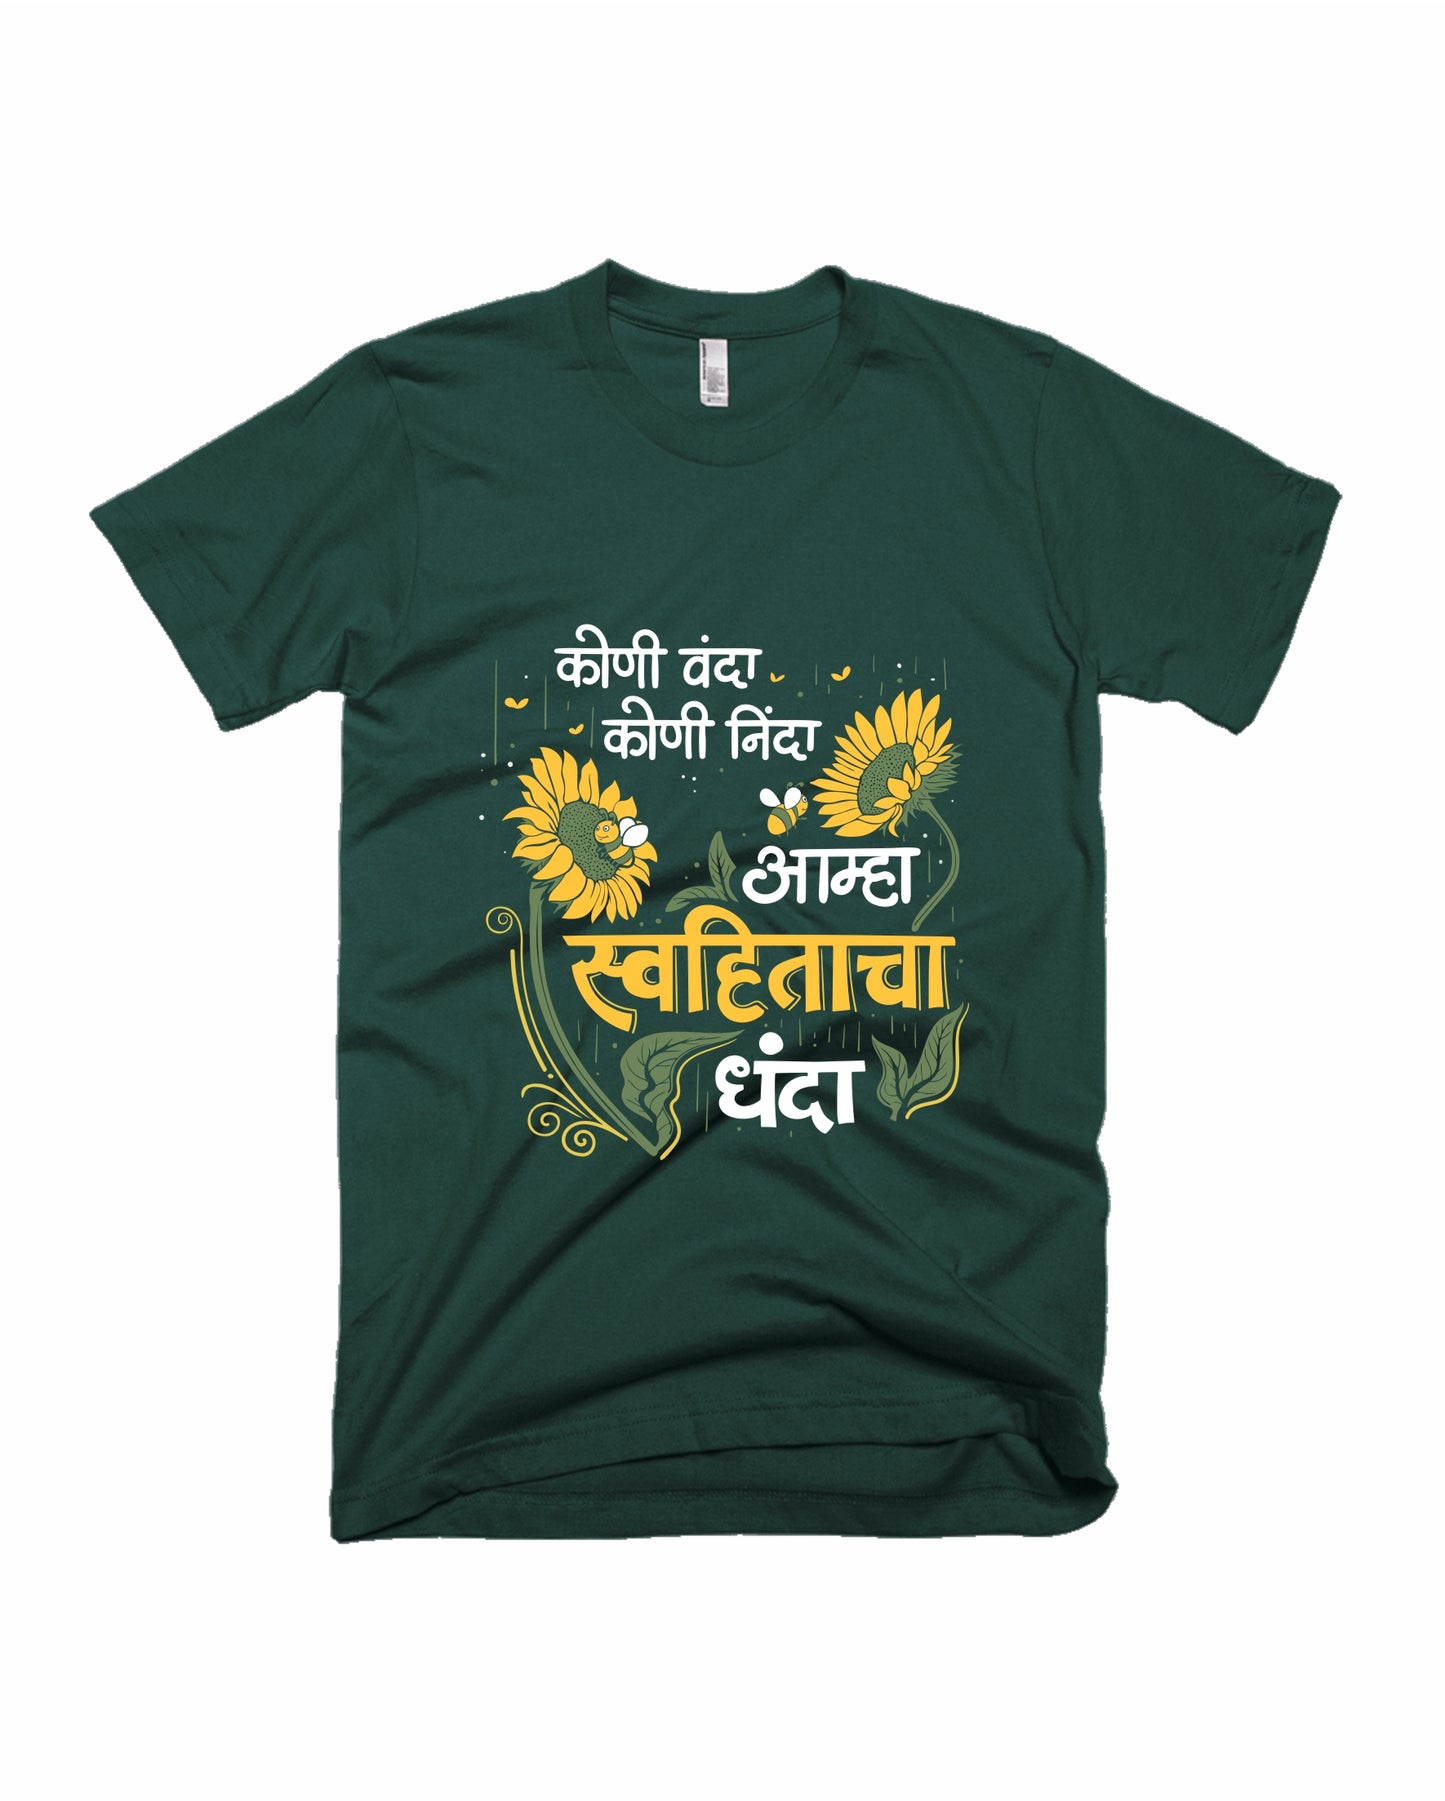 Koni Vanda Koni Ninda - Bottle Green - Unisex Adults T-shirt